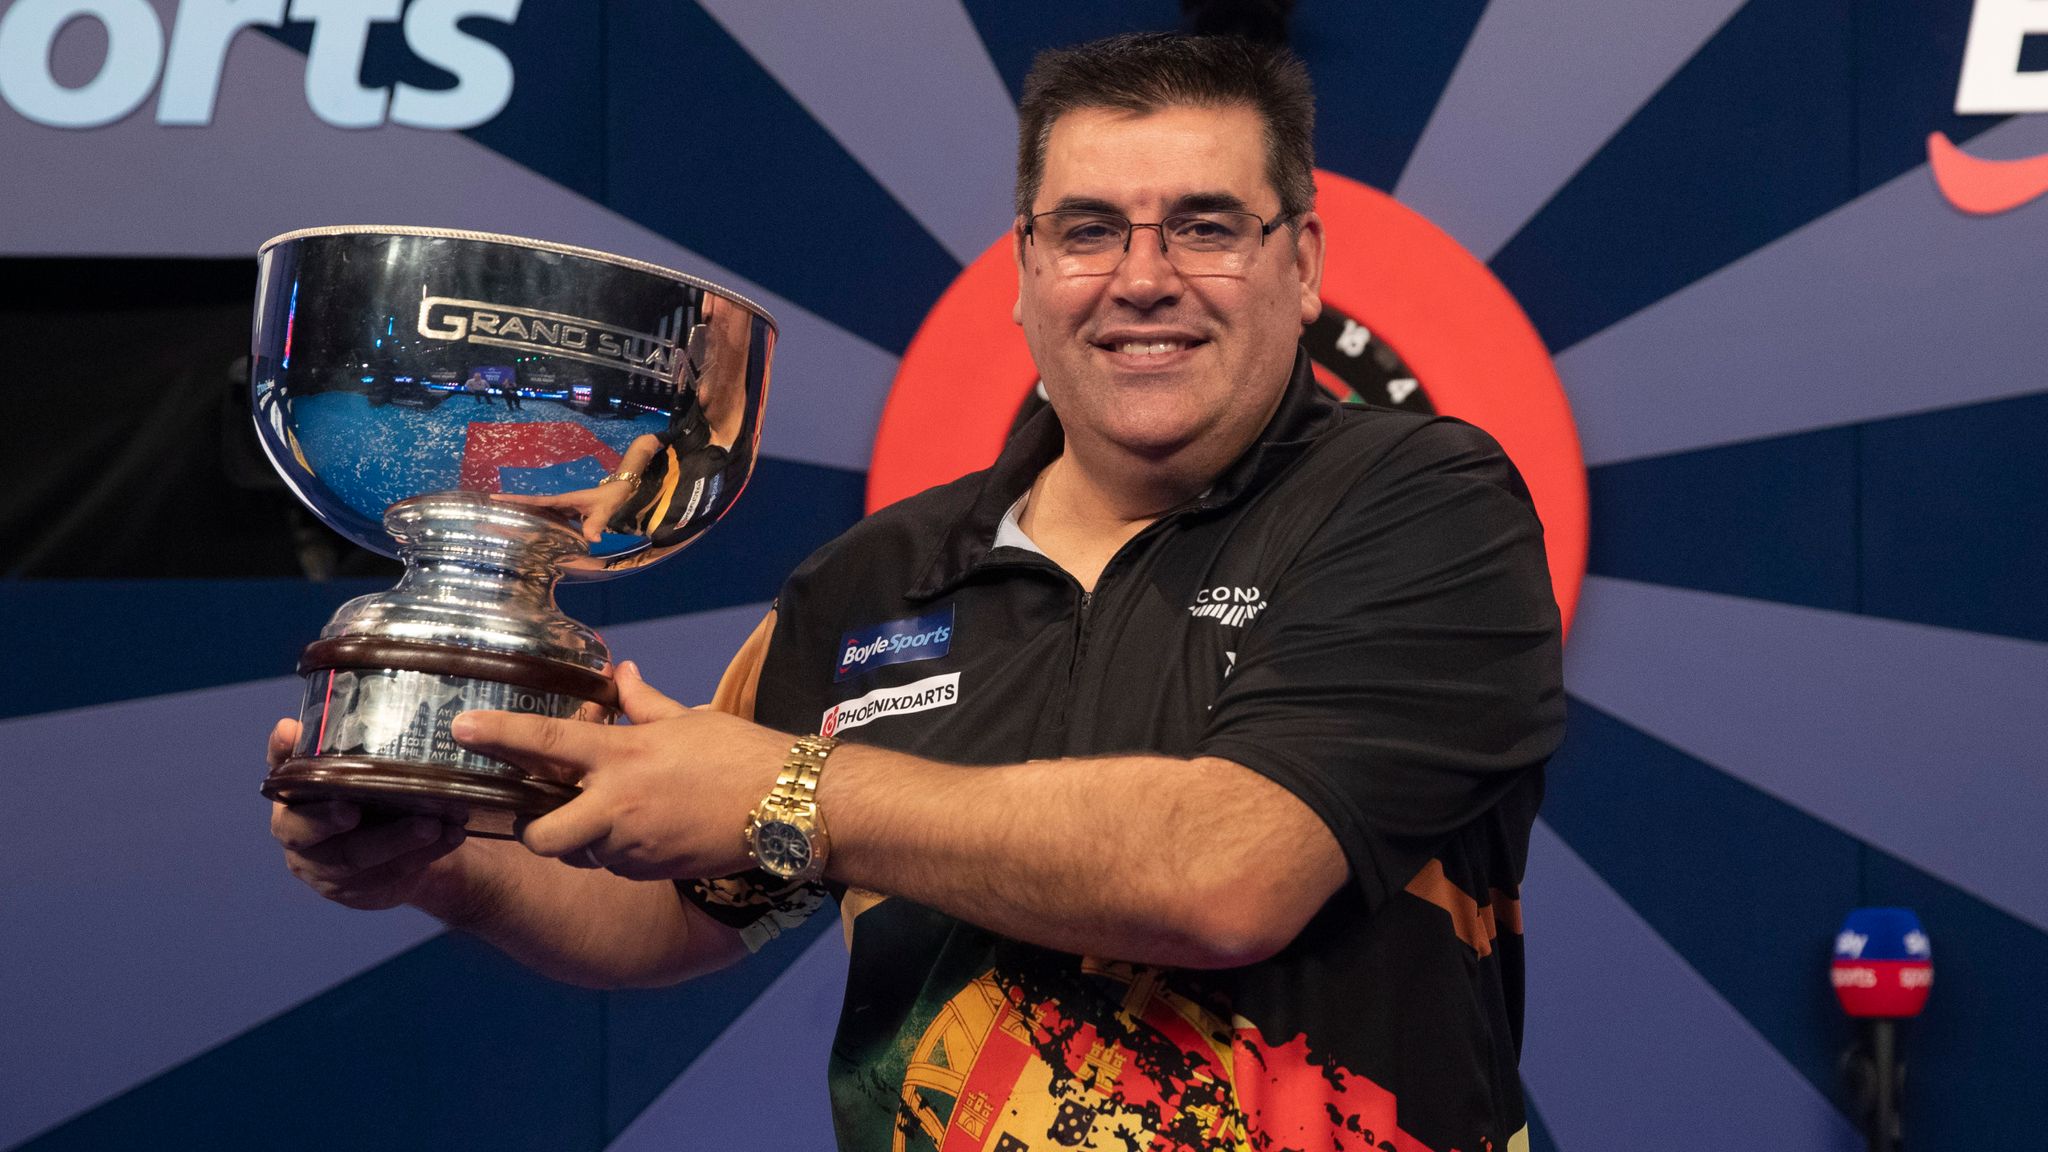 Grand Slam of Darts 2020: Jose De Sousa wins maiden major with victory over Wade | Darts News Sky Sports